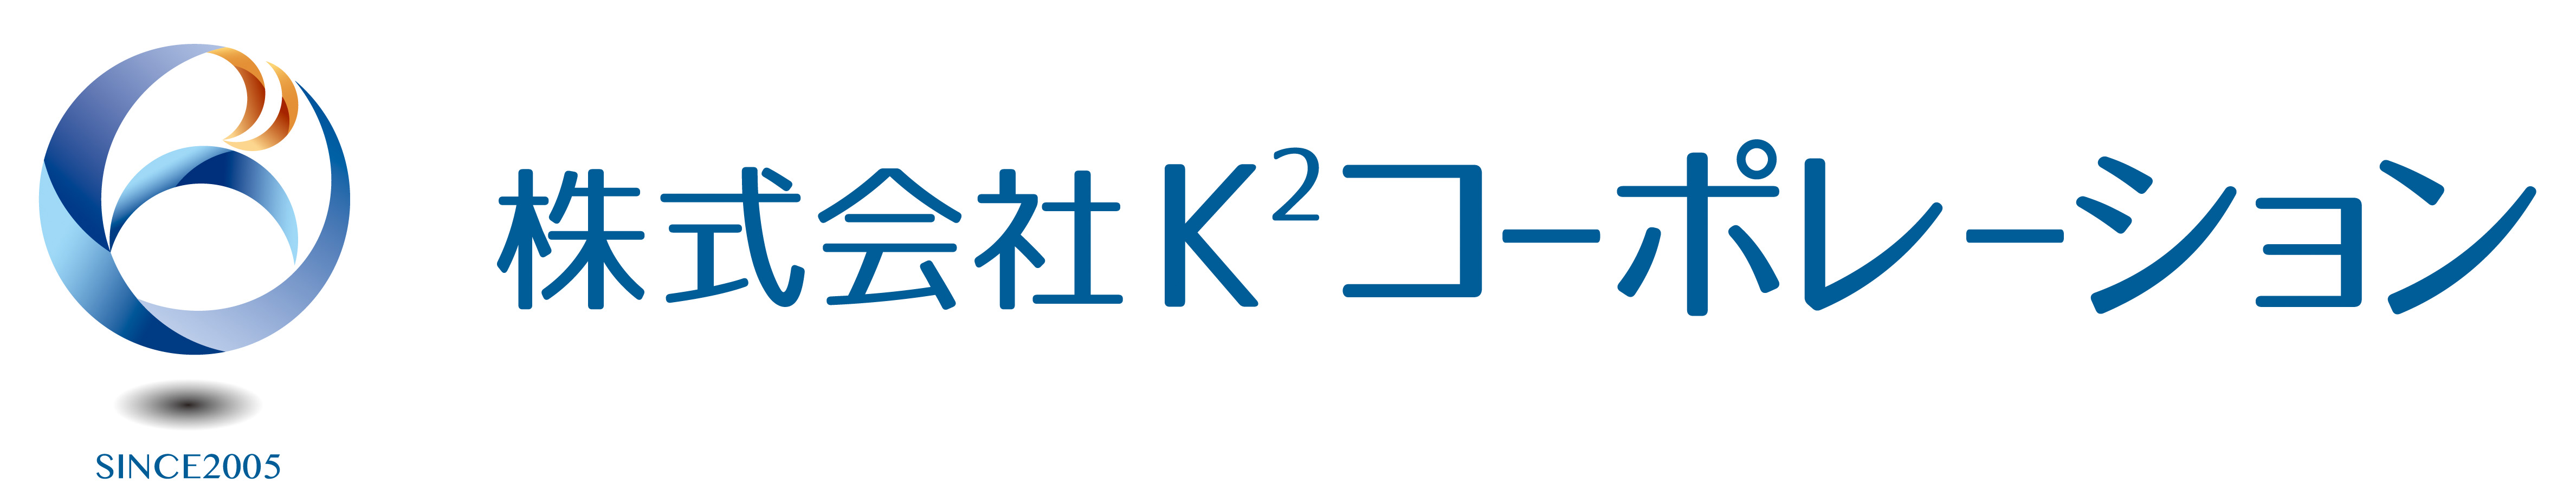 K2コーポレーションロゴ